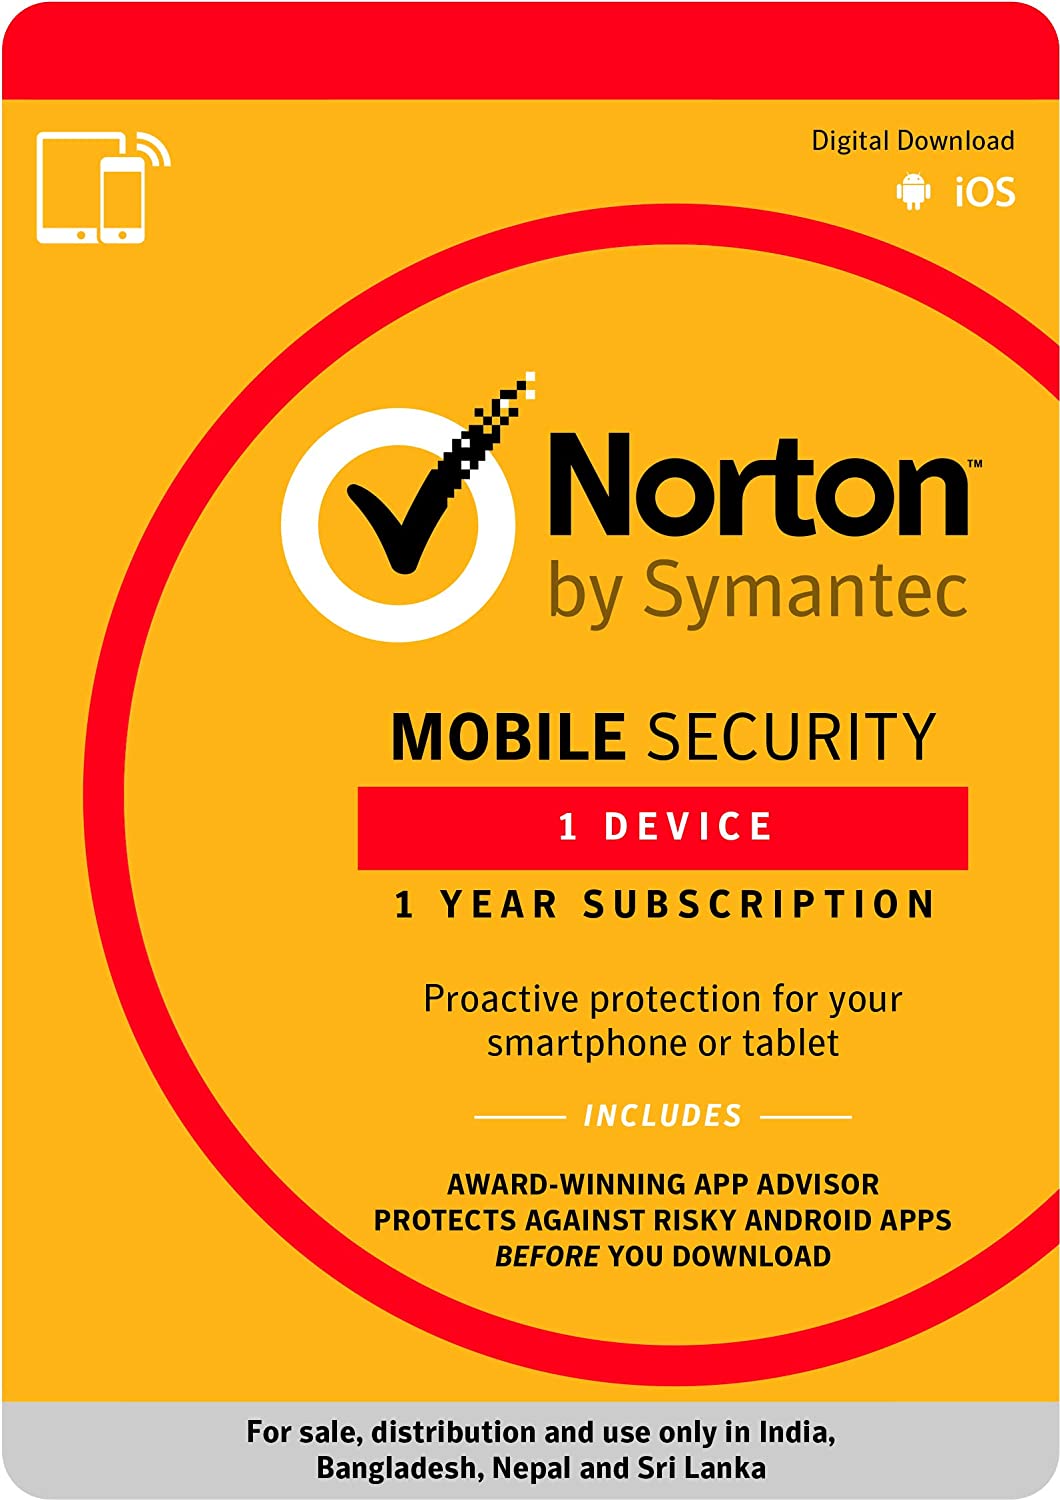 Norton Mobile Security 3.0 AP User Card TTPKG